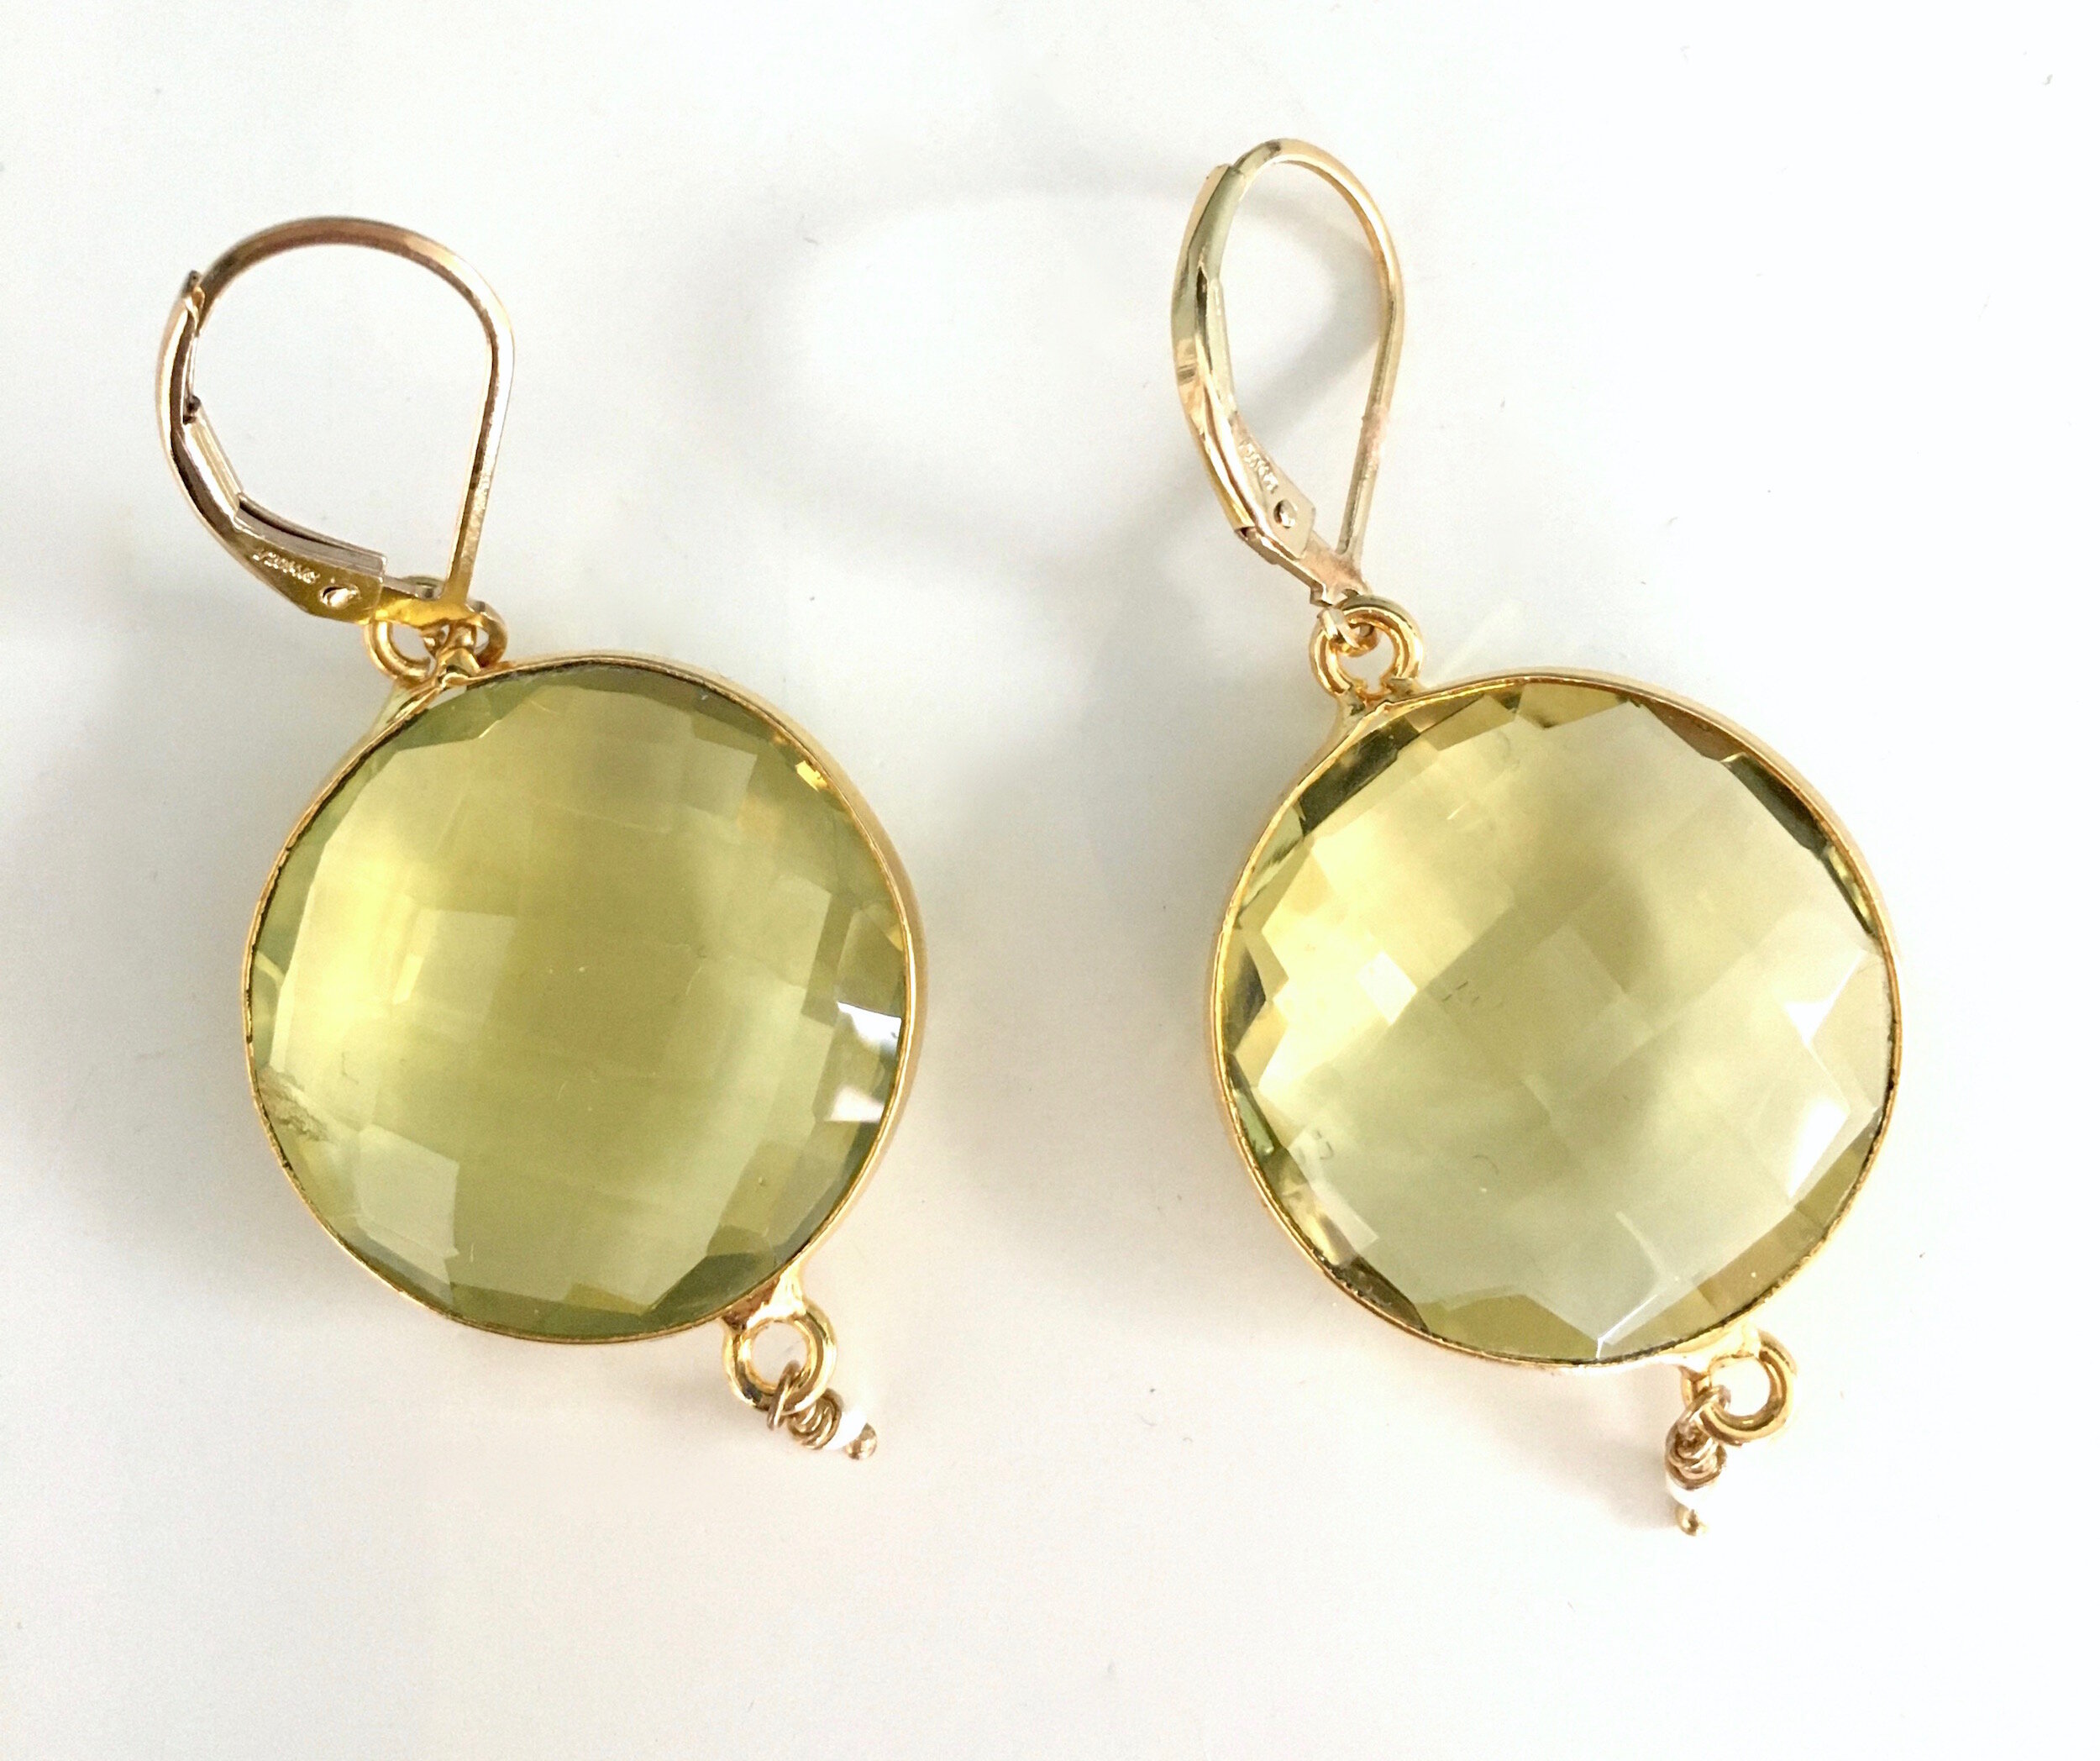  Title: Citrine Earrings  Medium: Citrine, Hydro Pearl, 14k gold plated  Size: 2cm diameter  Price: £80 